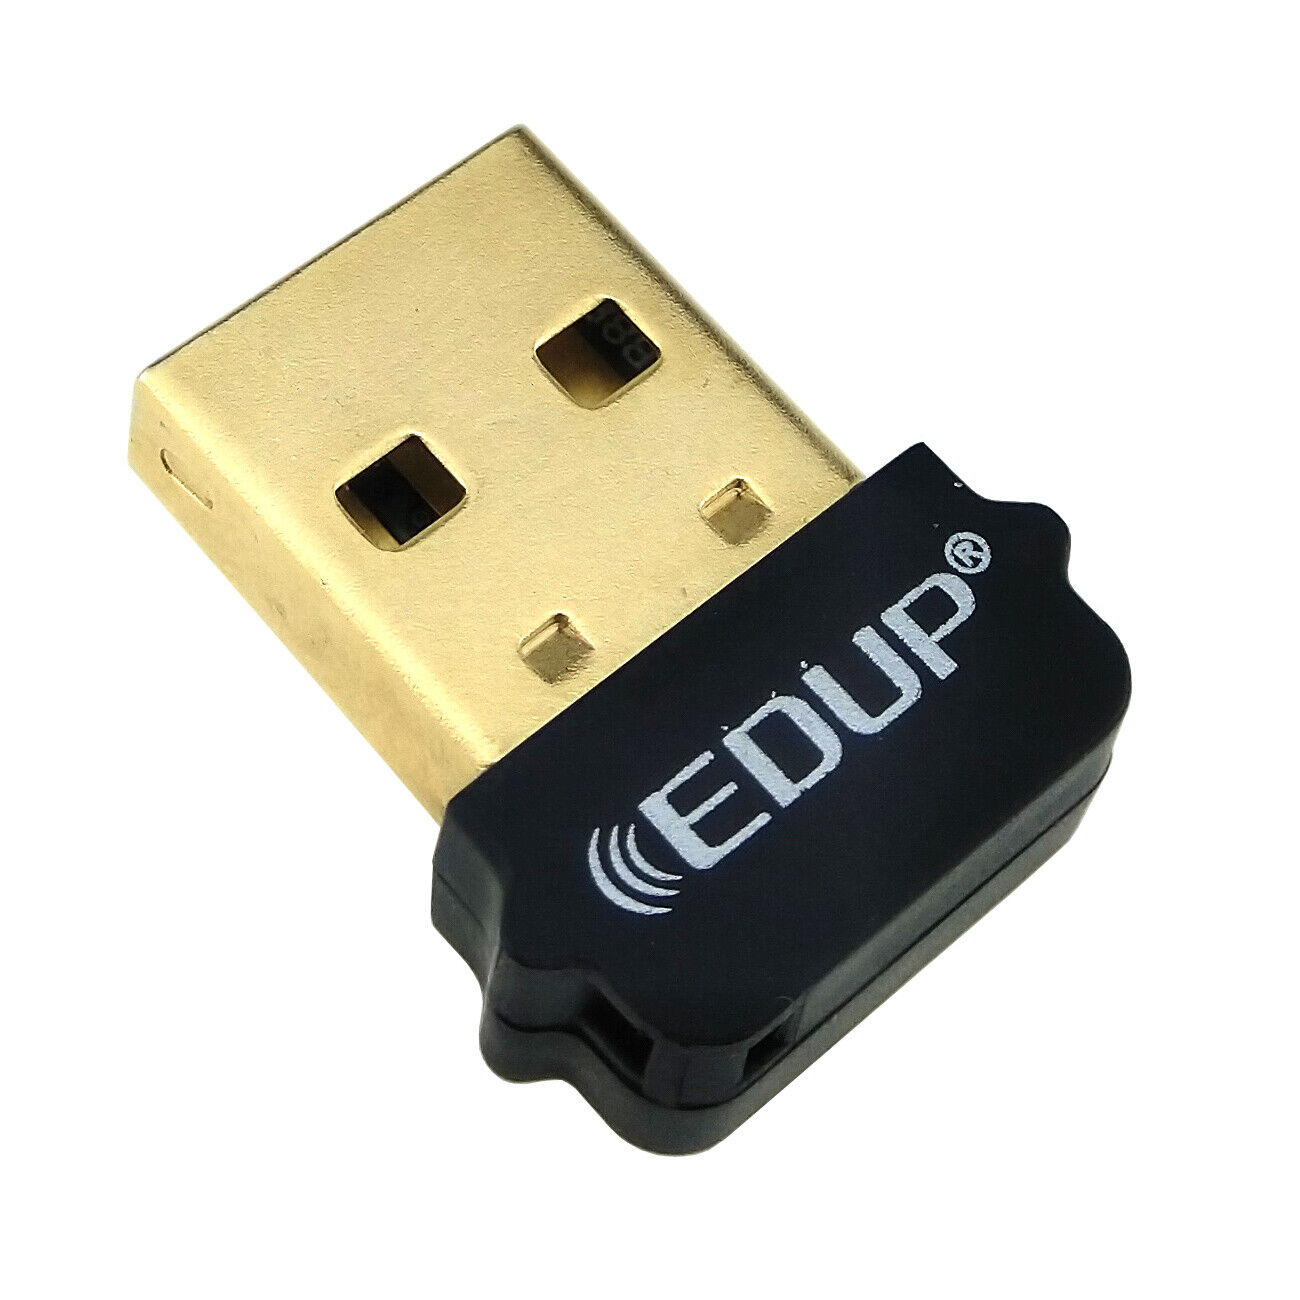 USB WiFi Adapter Dual Band AC 650Mbps Laptop Desktop 5.8GHz Mini Wireless Dongle